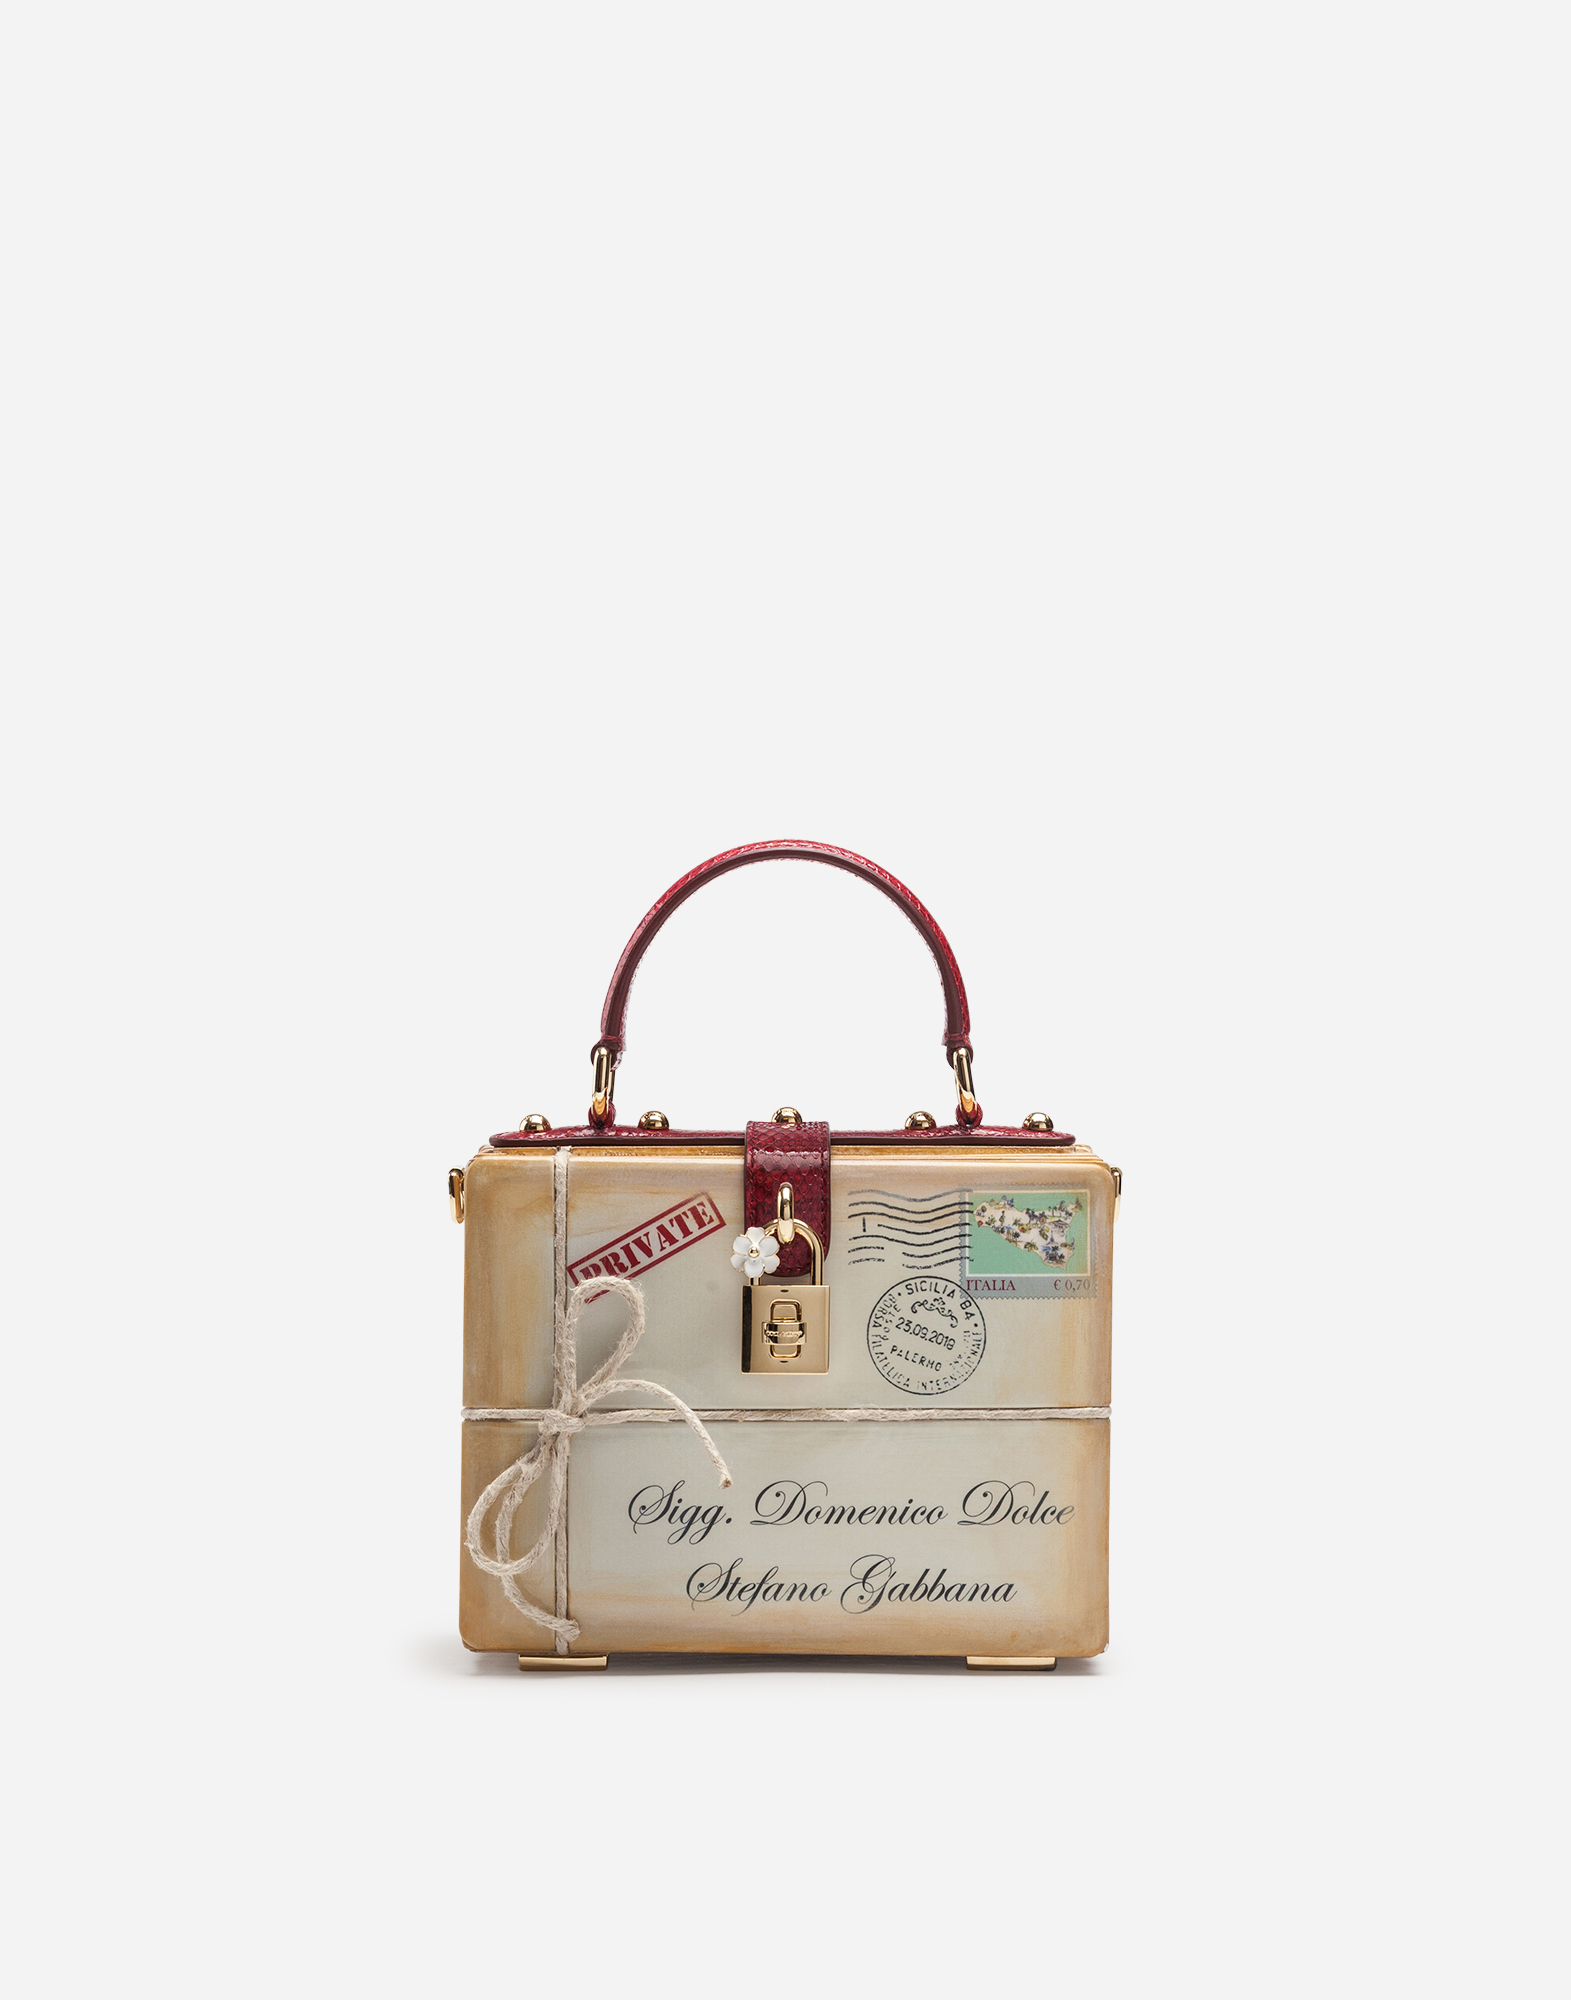 dolce and gabbana handbags 2018